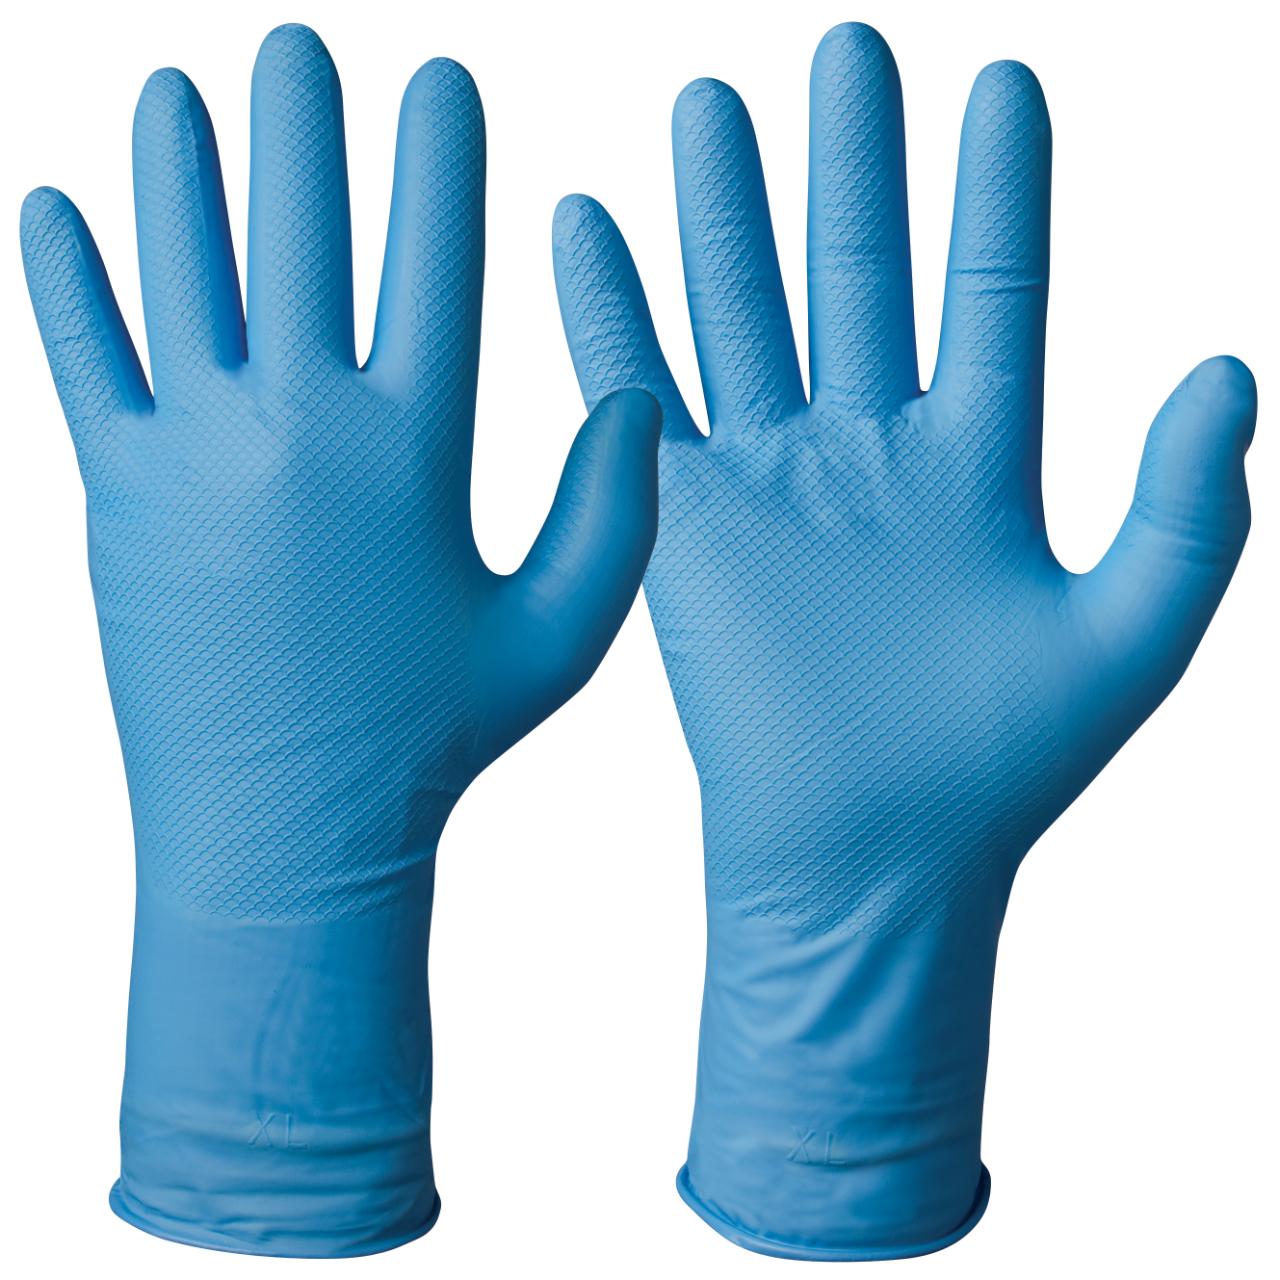 Single-Use Gloves